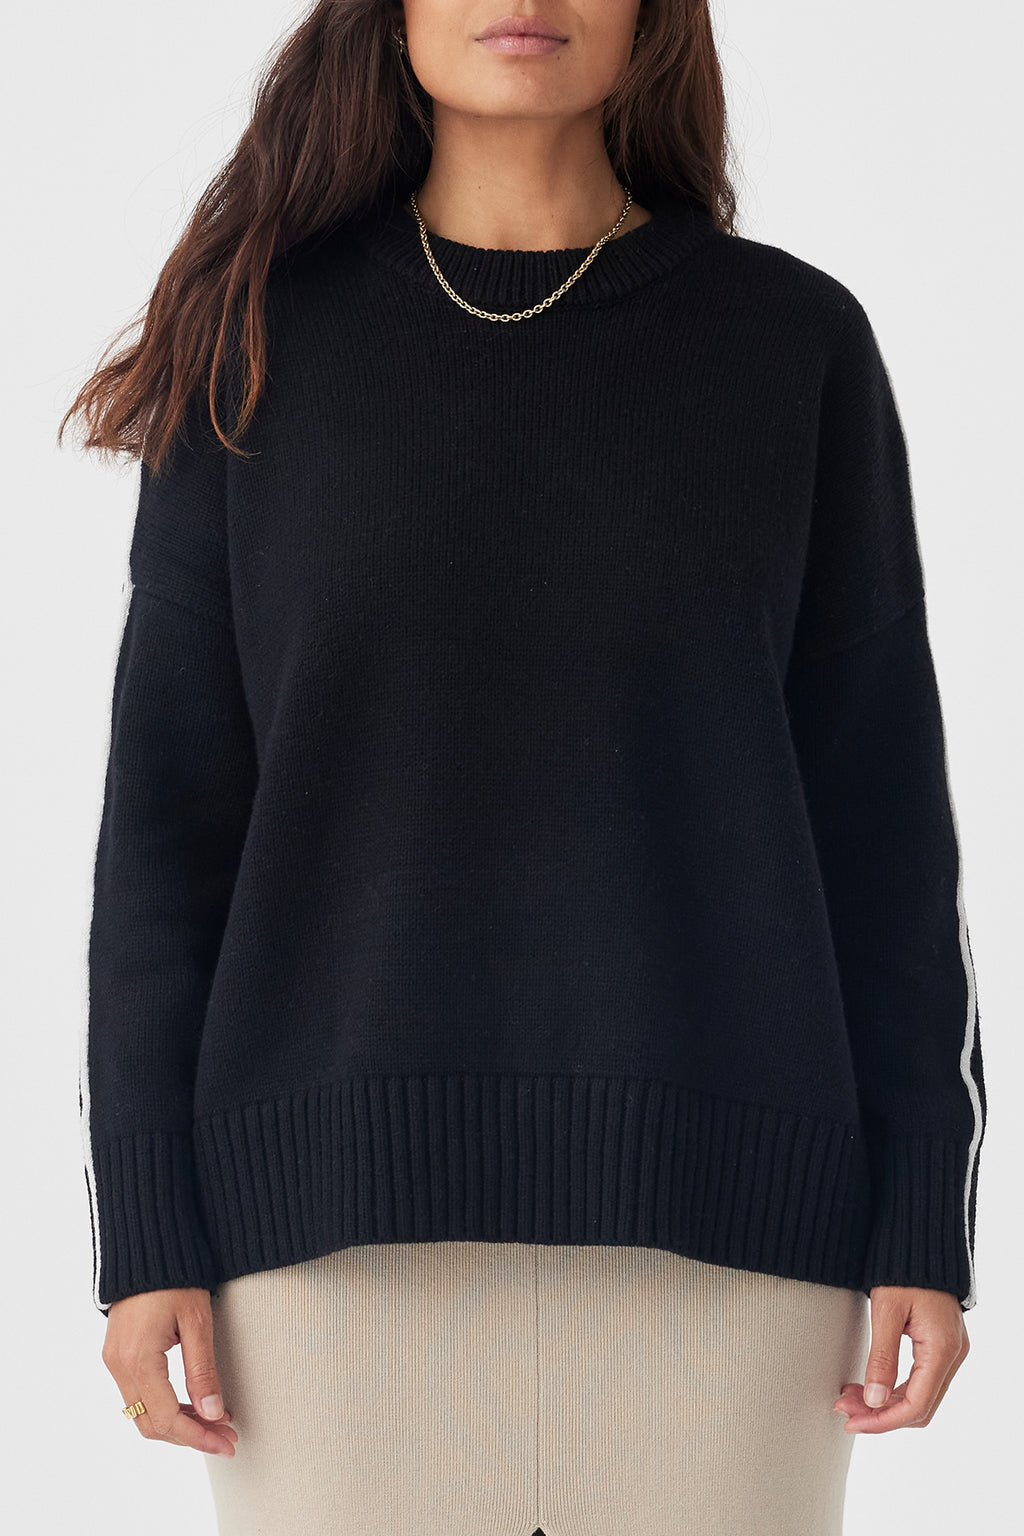 Sora Sweater - Black